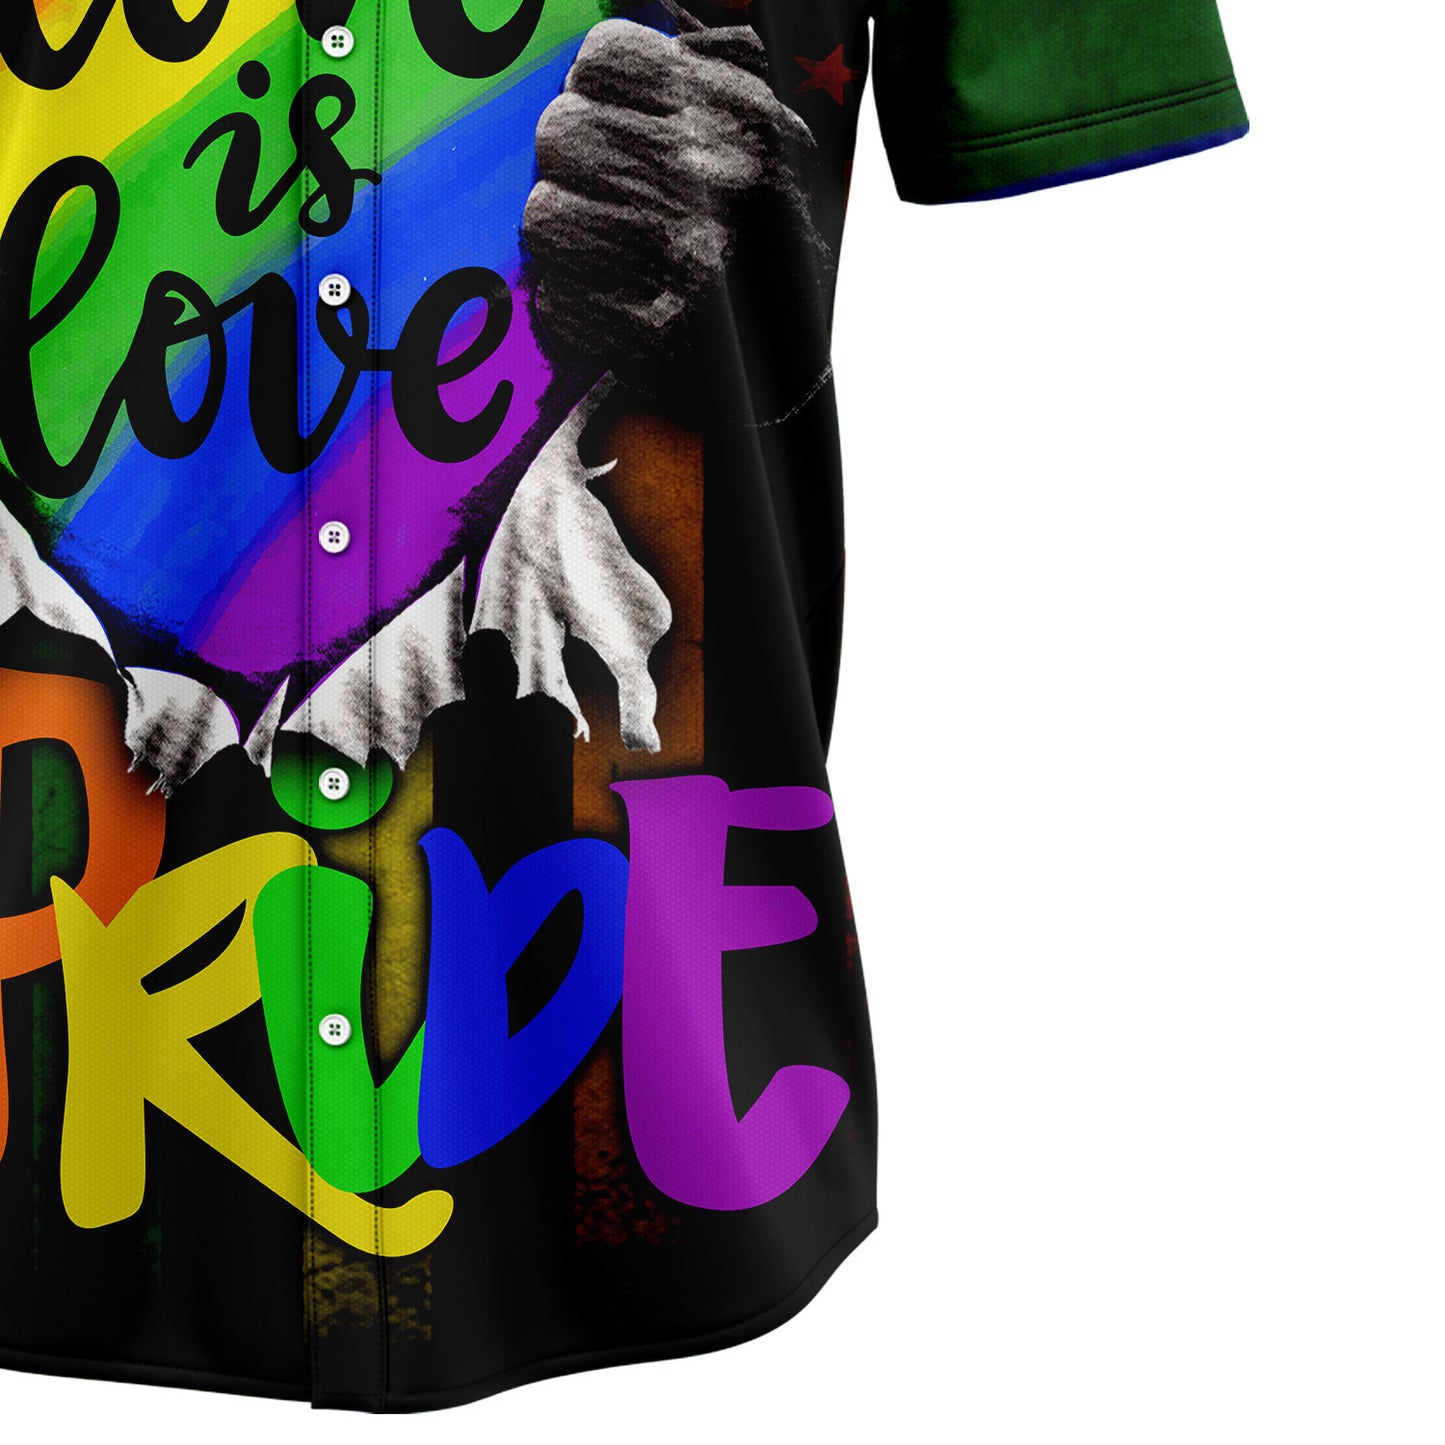 Love Is Love LGBT Pride H28814 Hawaiian Shirt